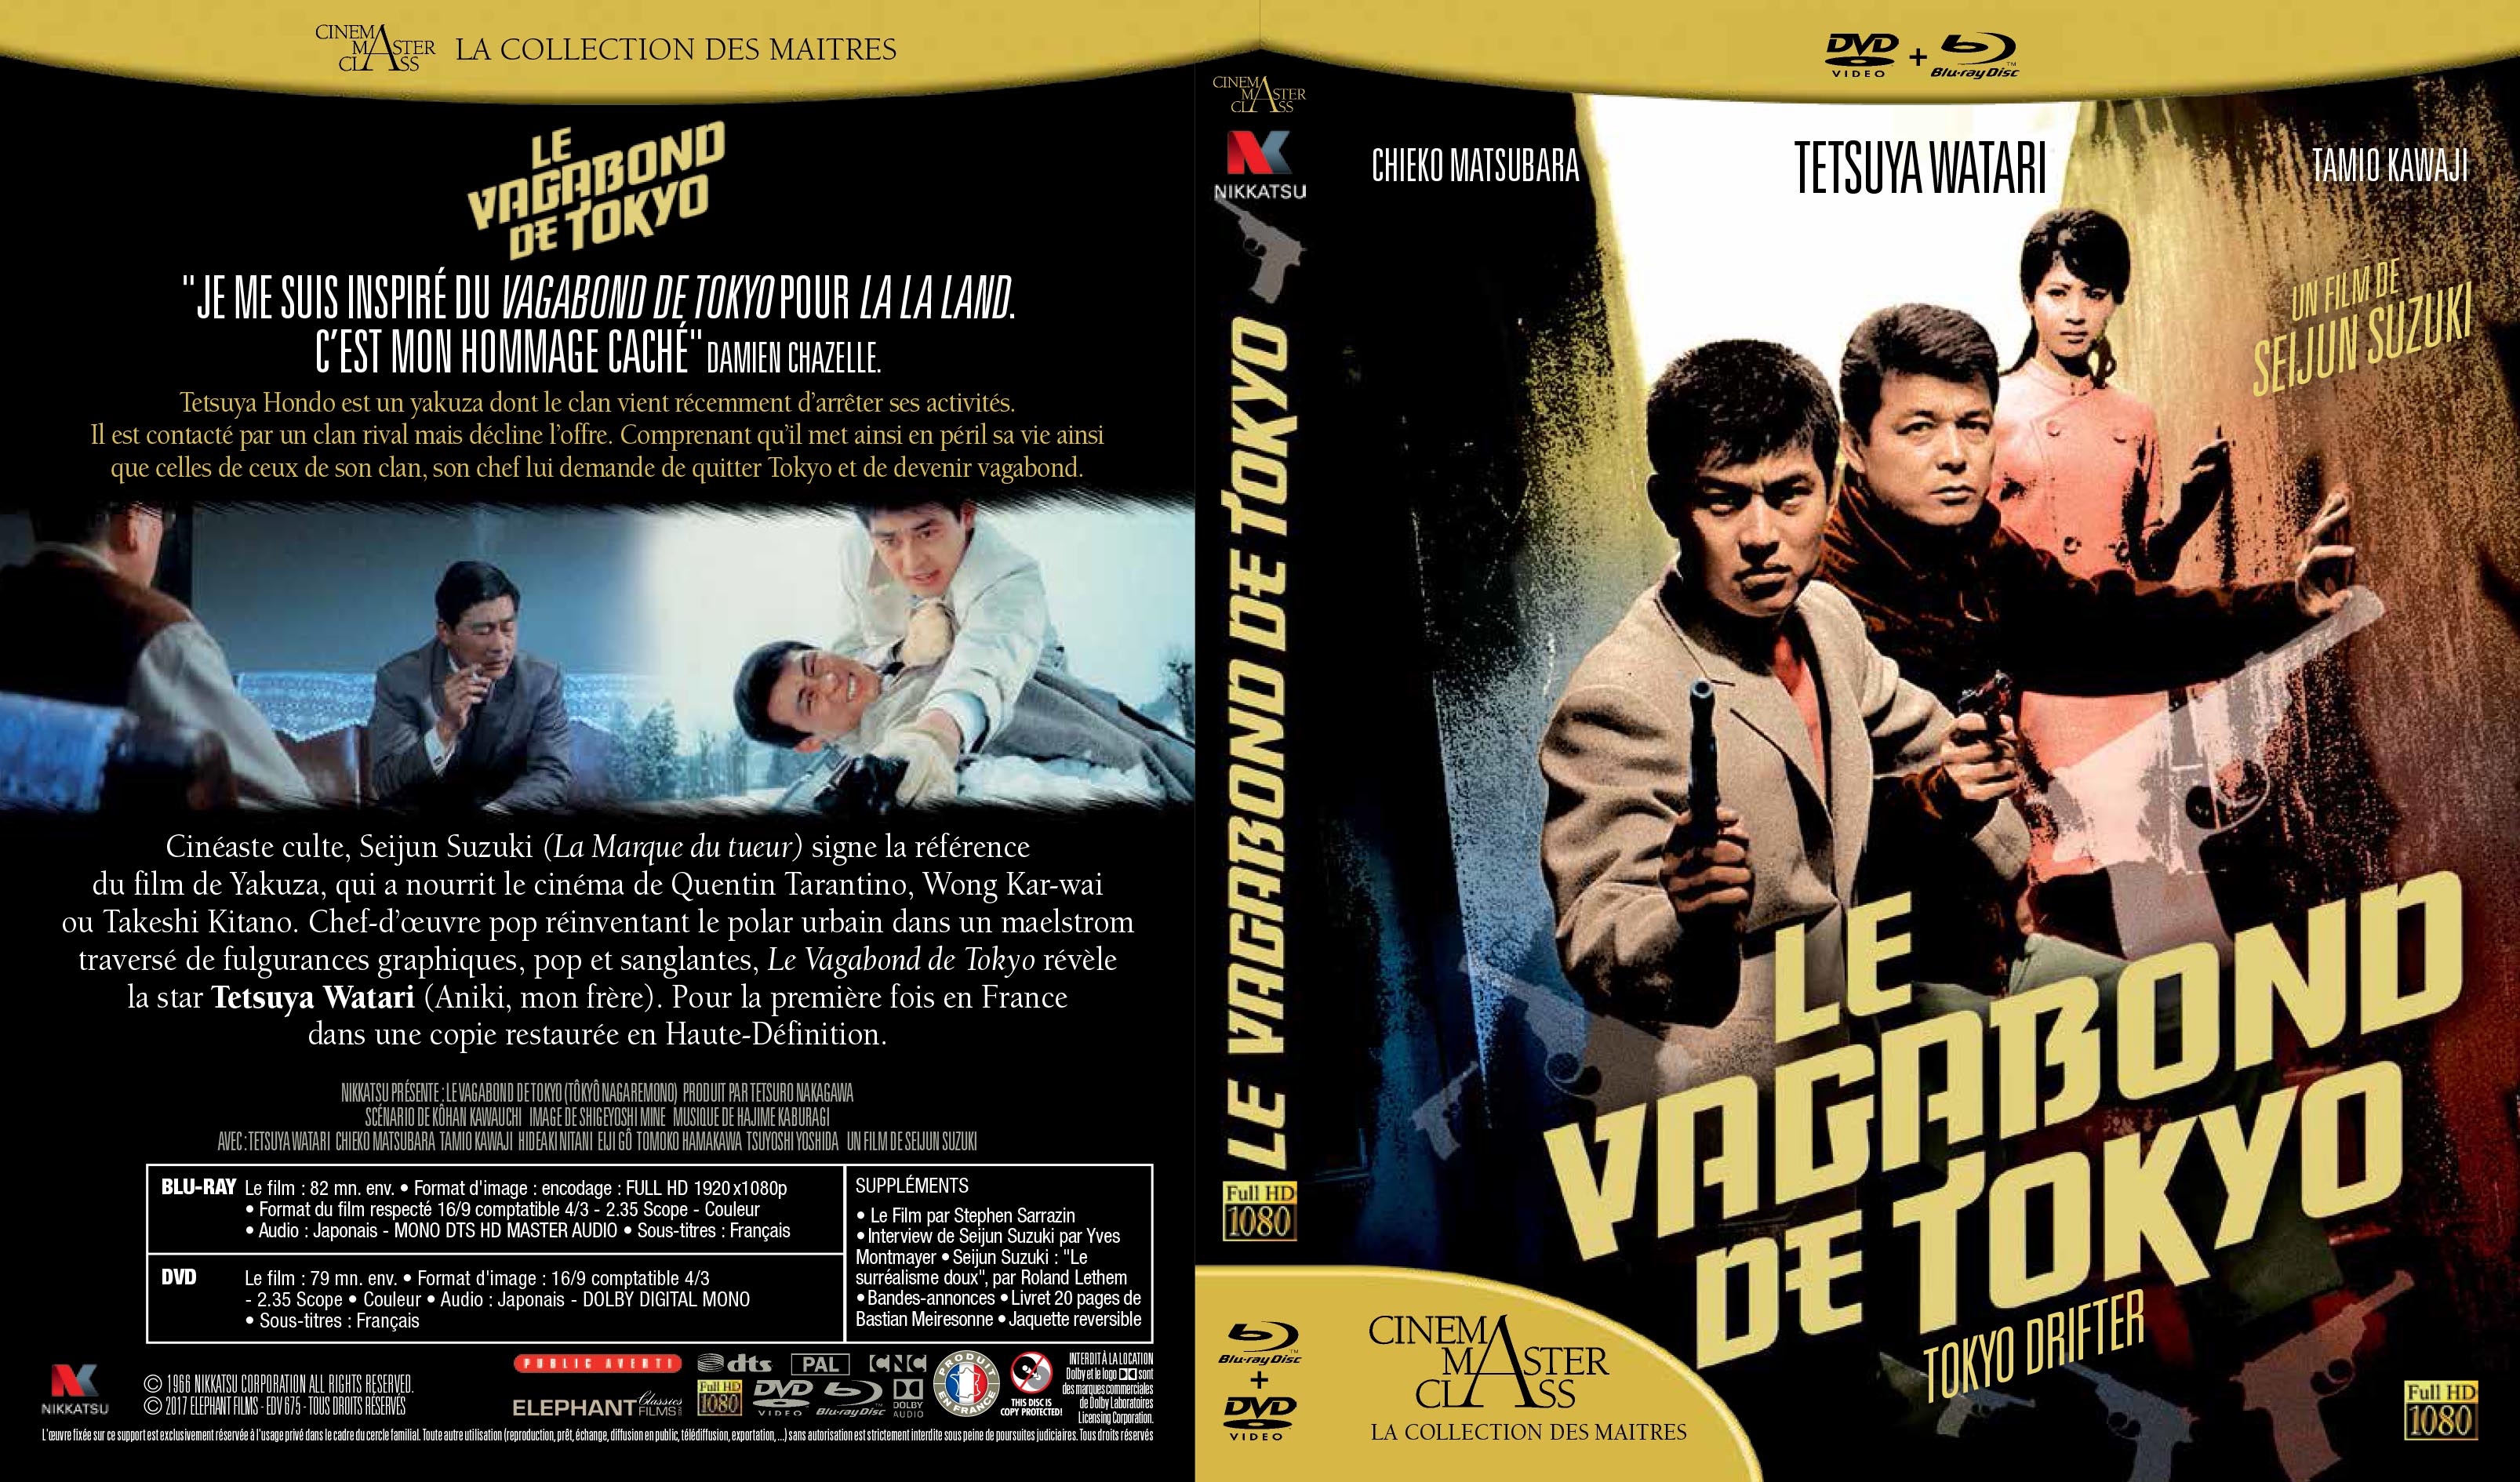 Jaquette DVD Le vagabond de tokyo (BLU-RAY)